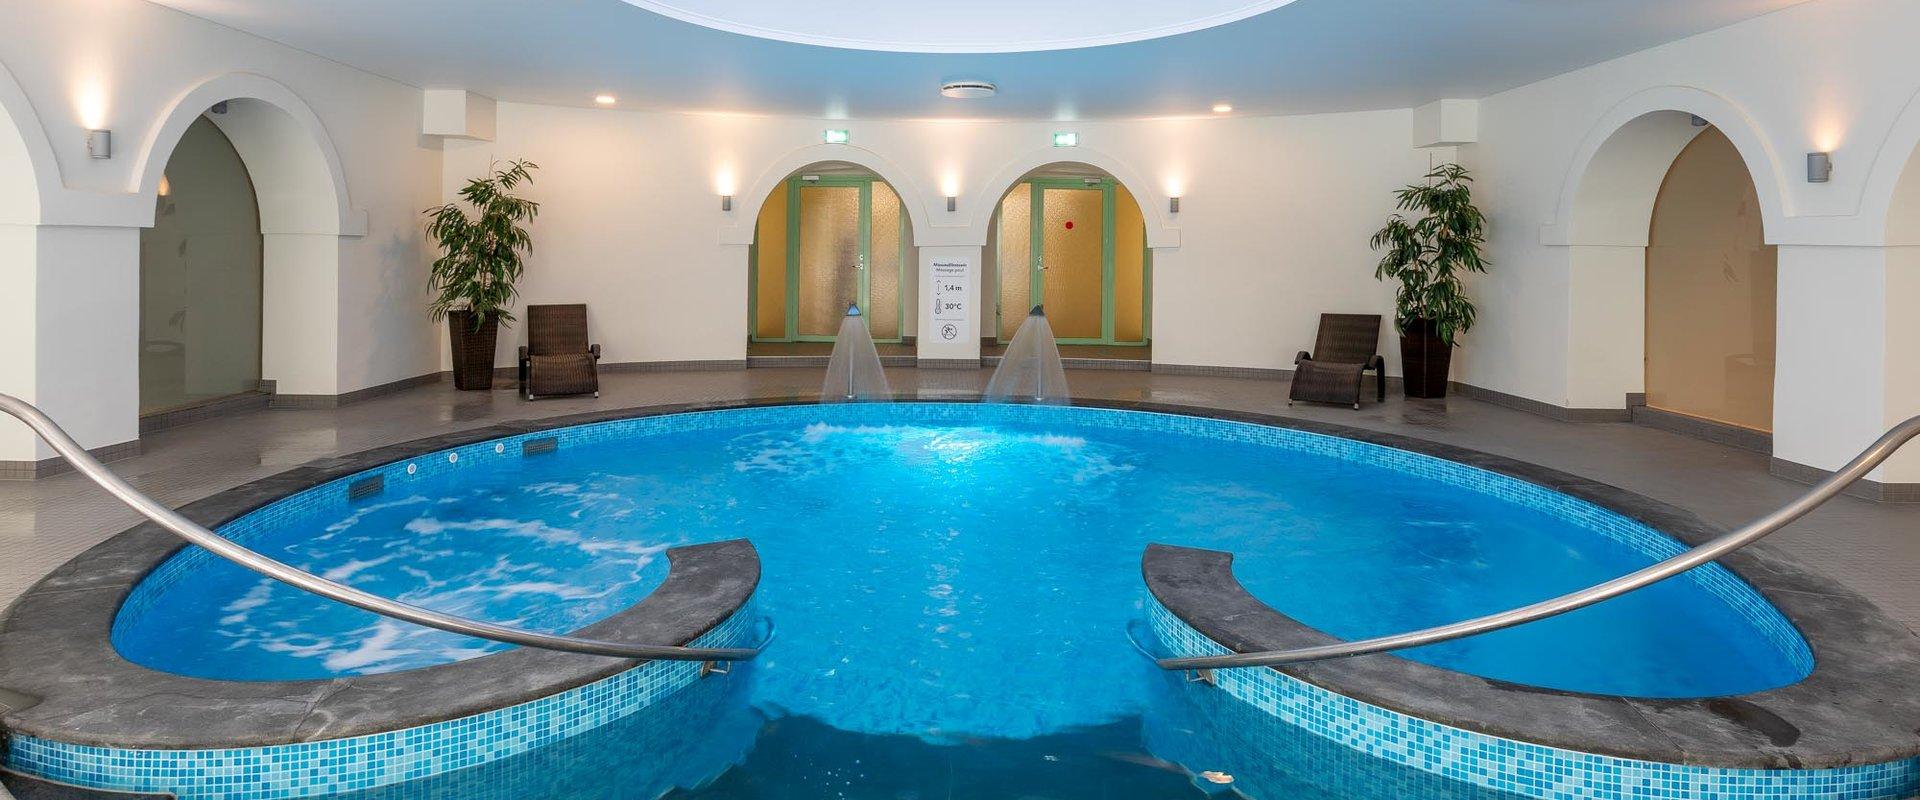 Hestia Hotel Strand, massage pool in the spa